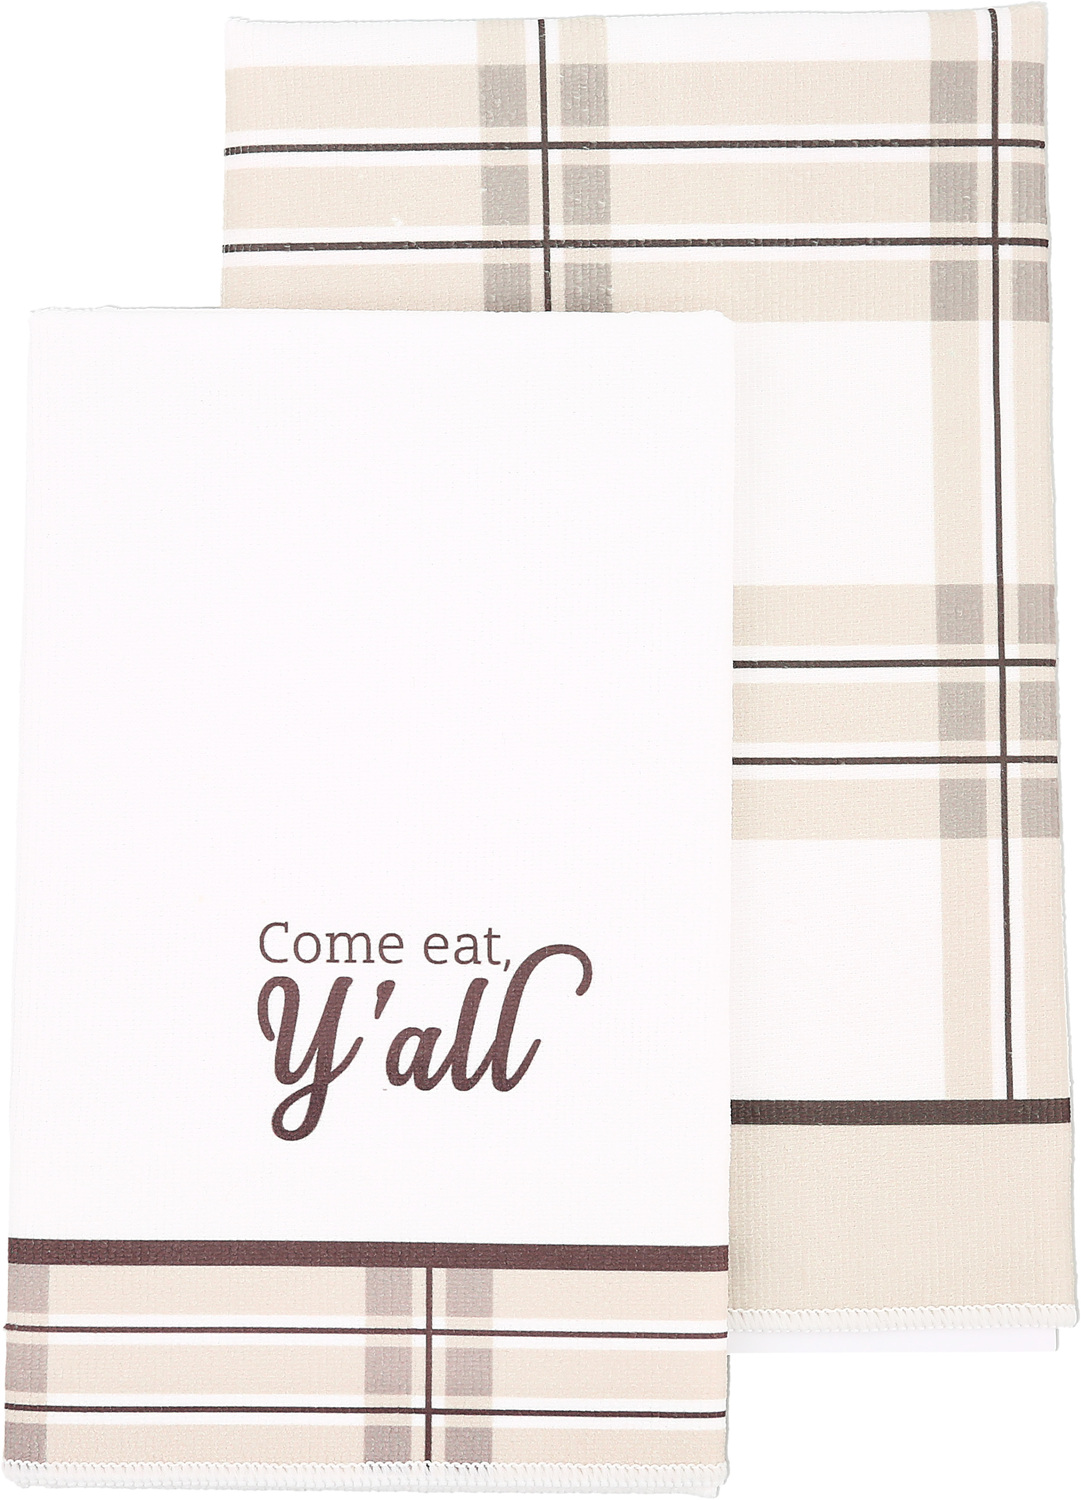 Y'all by Farmhouse Family - Y'all - Tea Towel Gift Set
(2 - 19.75" x 27.5")